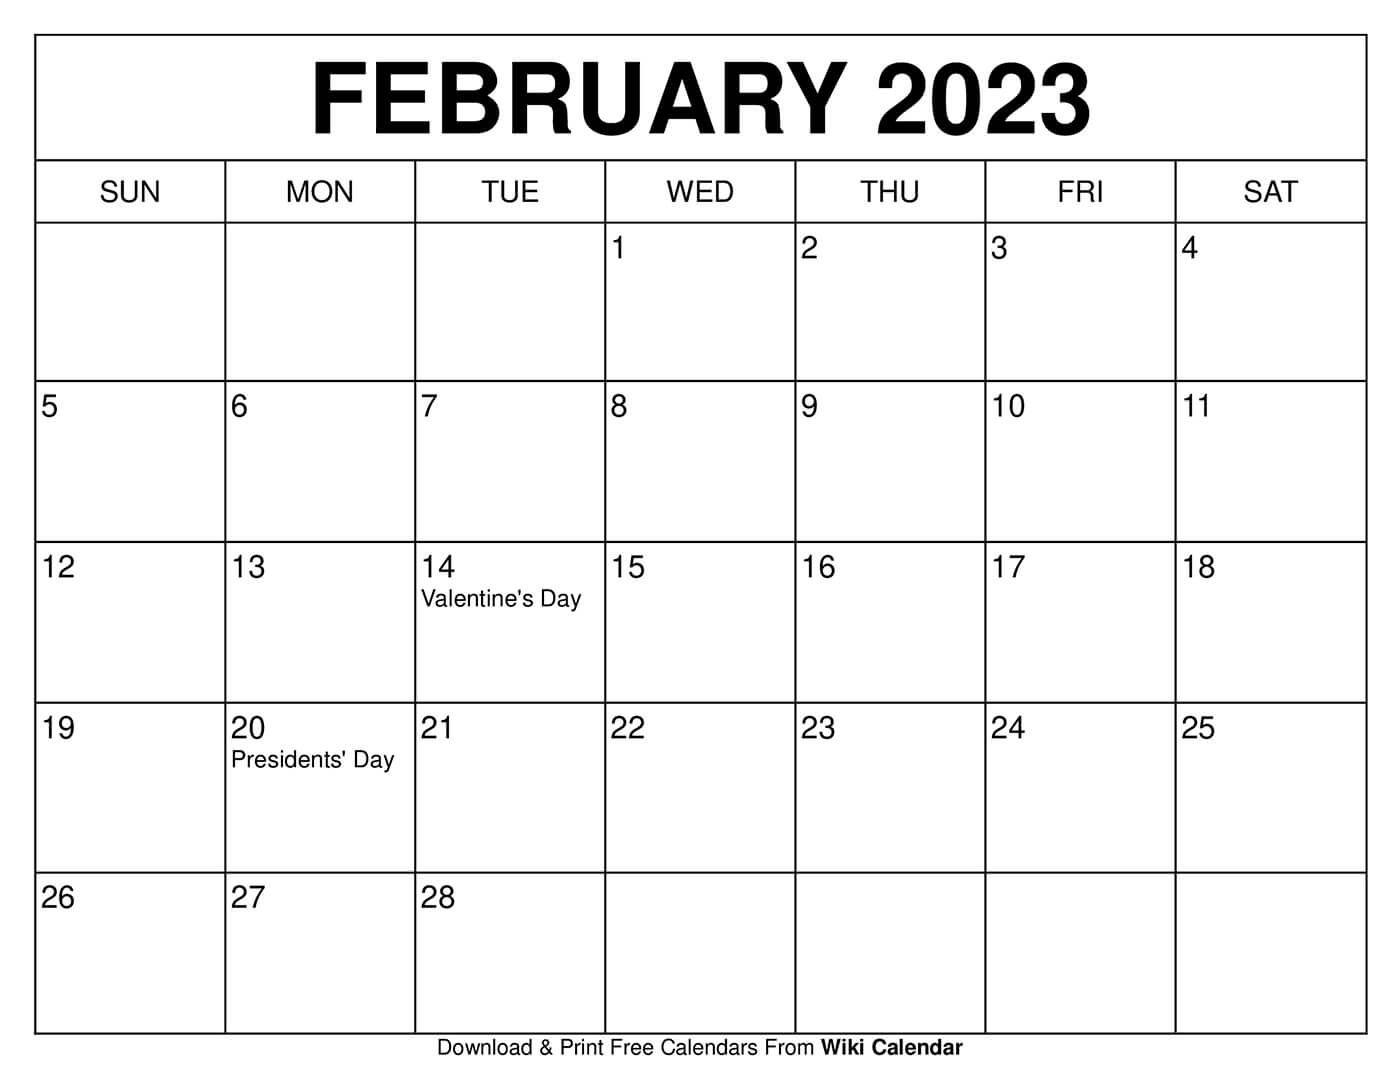 feb-2023-calendar-printable-free-pdf-get-calendar-2023-update